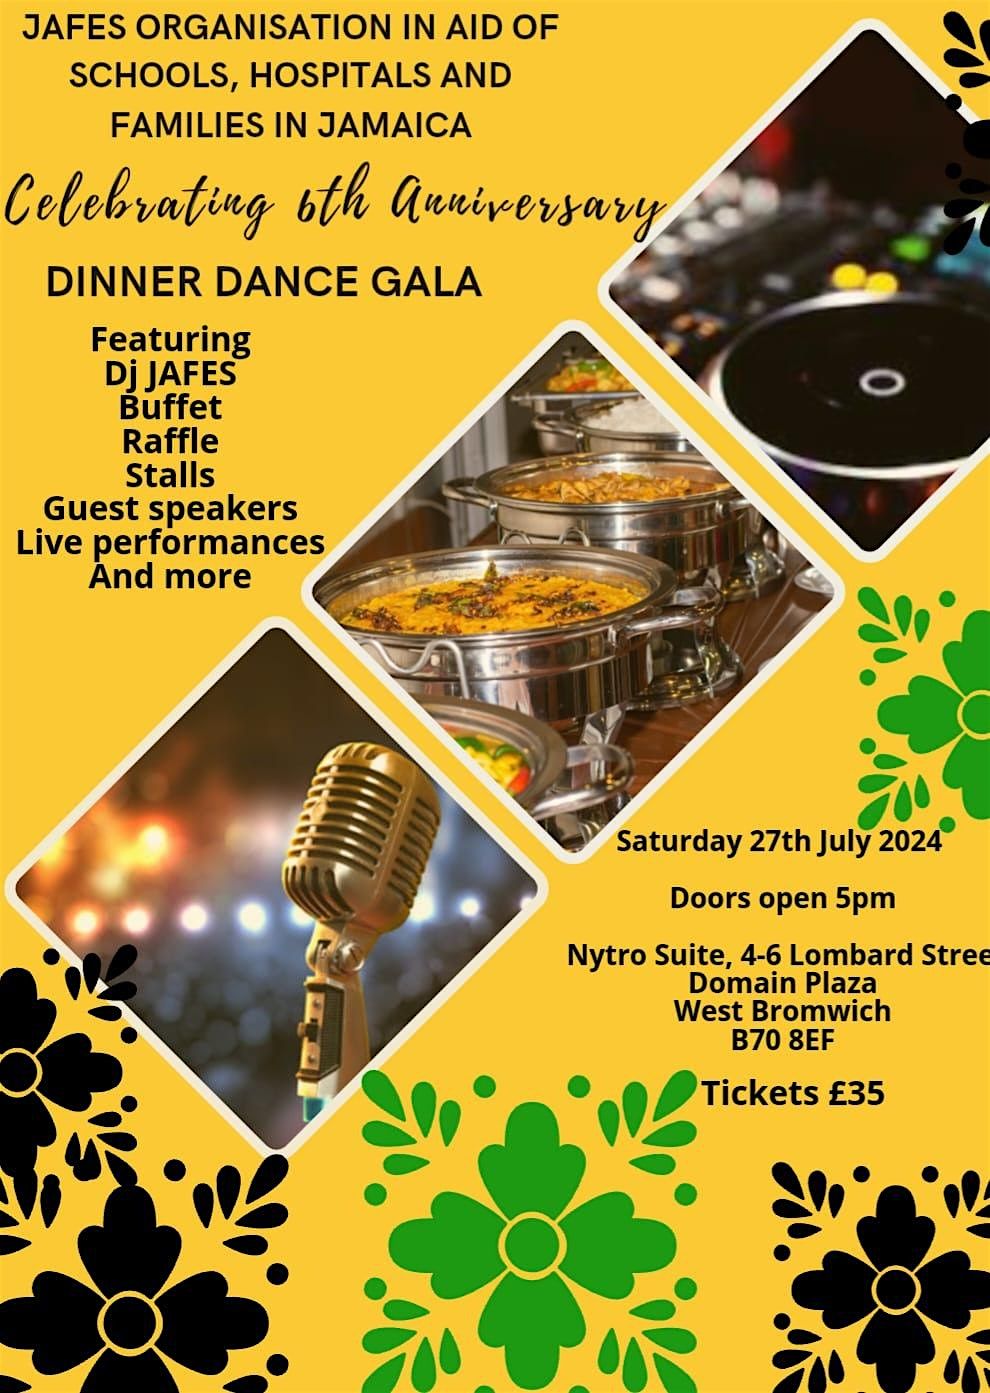 JA.FES4U Charity Dinner, Dance Gala Fundraising Event